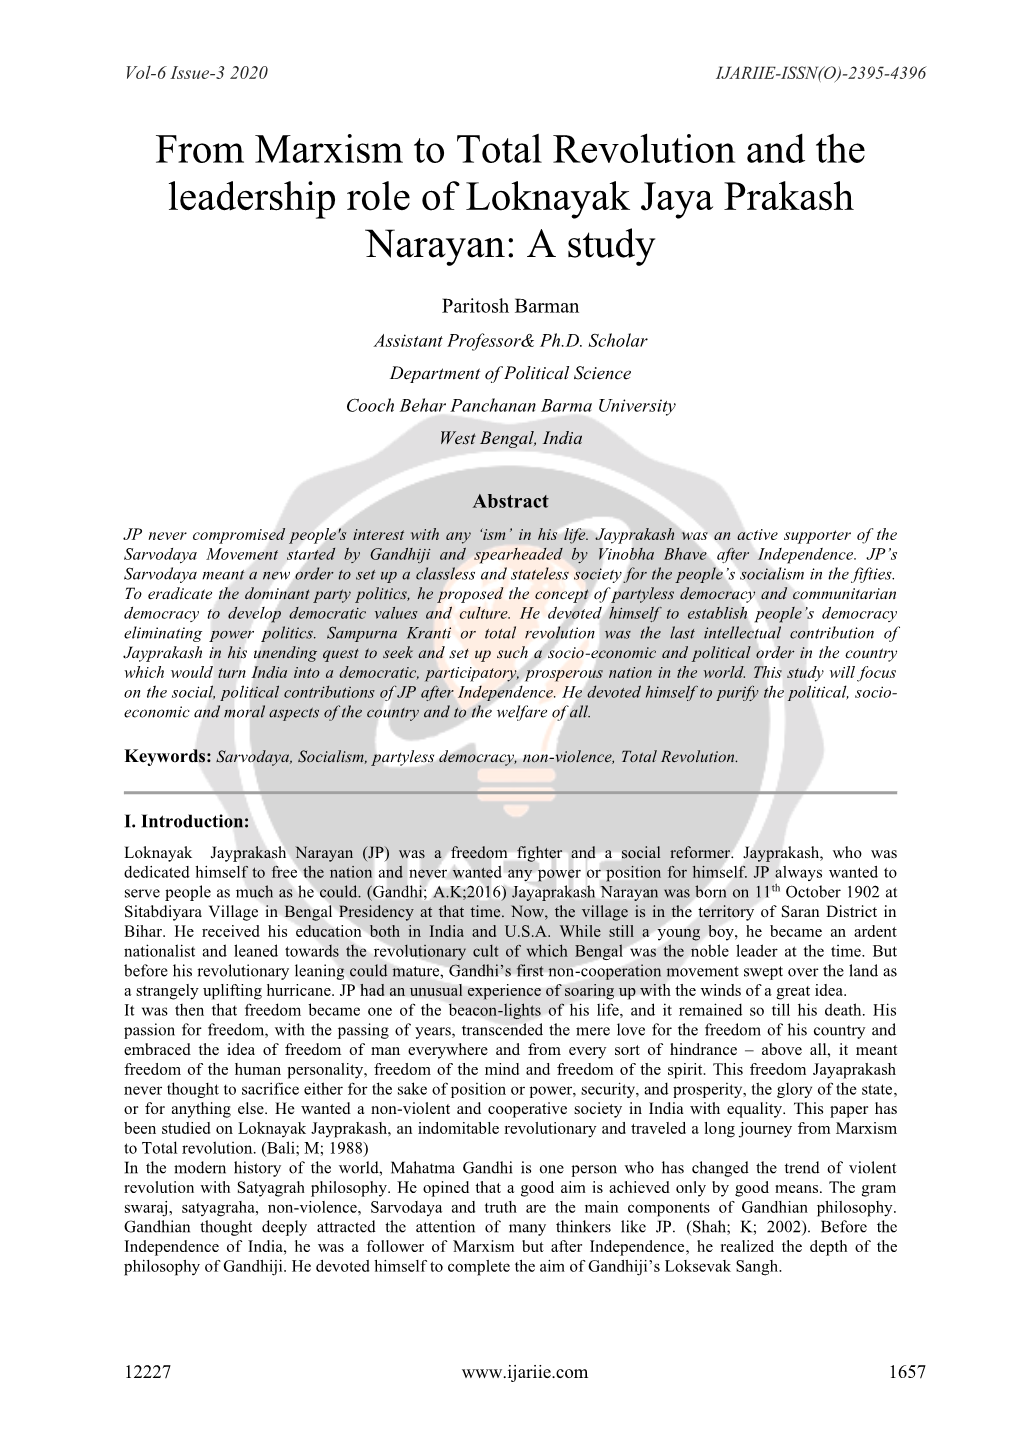 From Marxism to Total Revolution and the Leadership Role of Loknayak Jaya Prakash Narayan: a Study